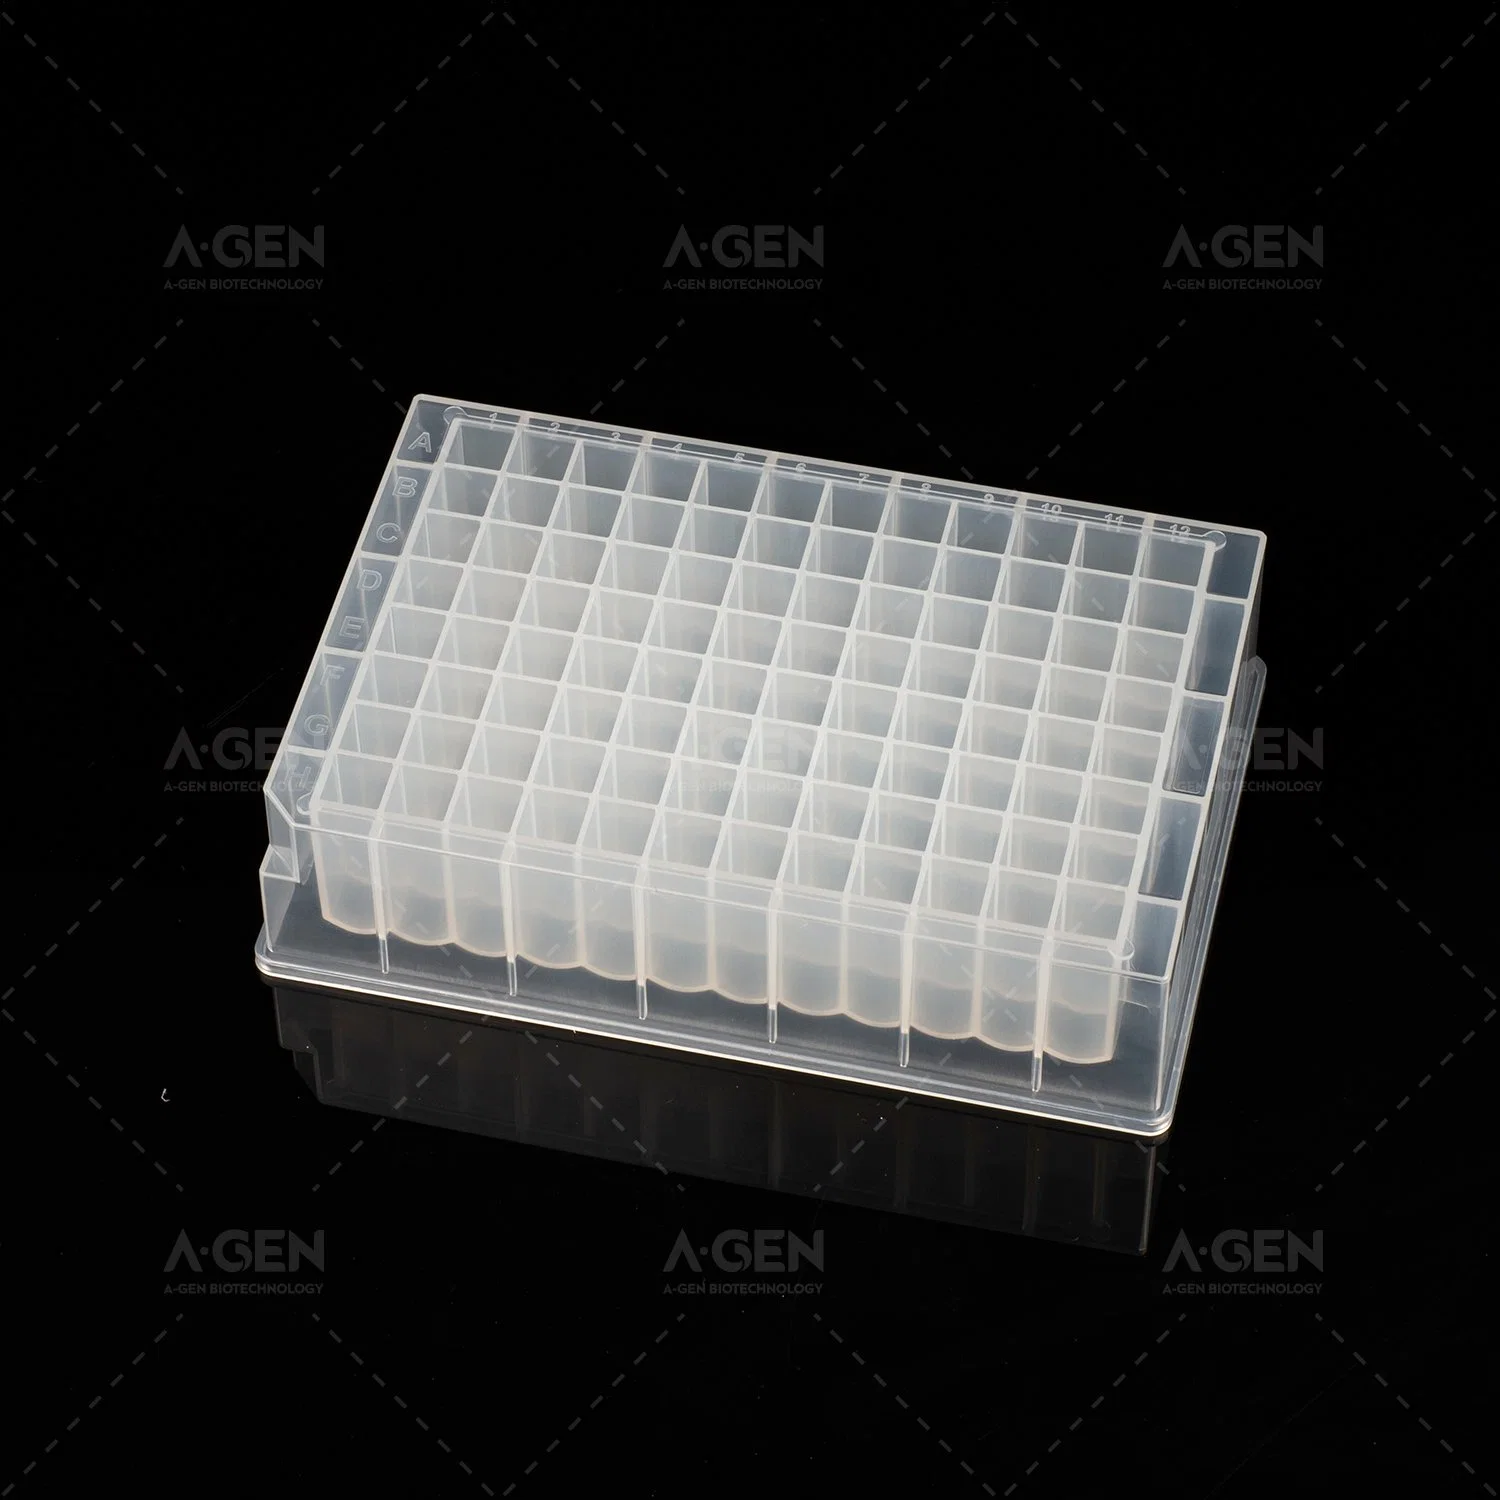 Polypropylene 96 Square 1.6ml U Bottom Sterile DNA Rna Free Deep Well Plate for Kingfisher Flex